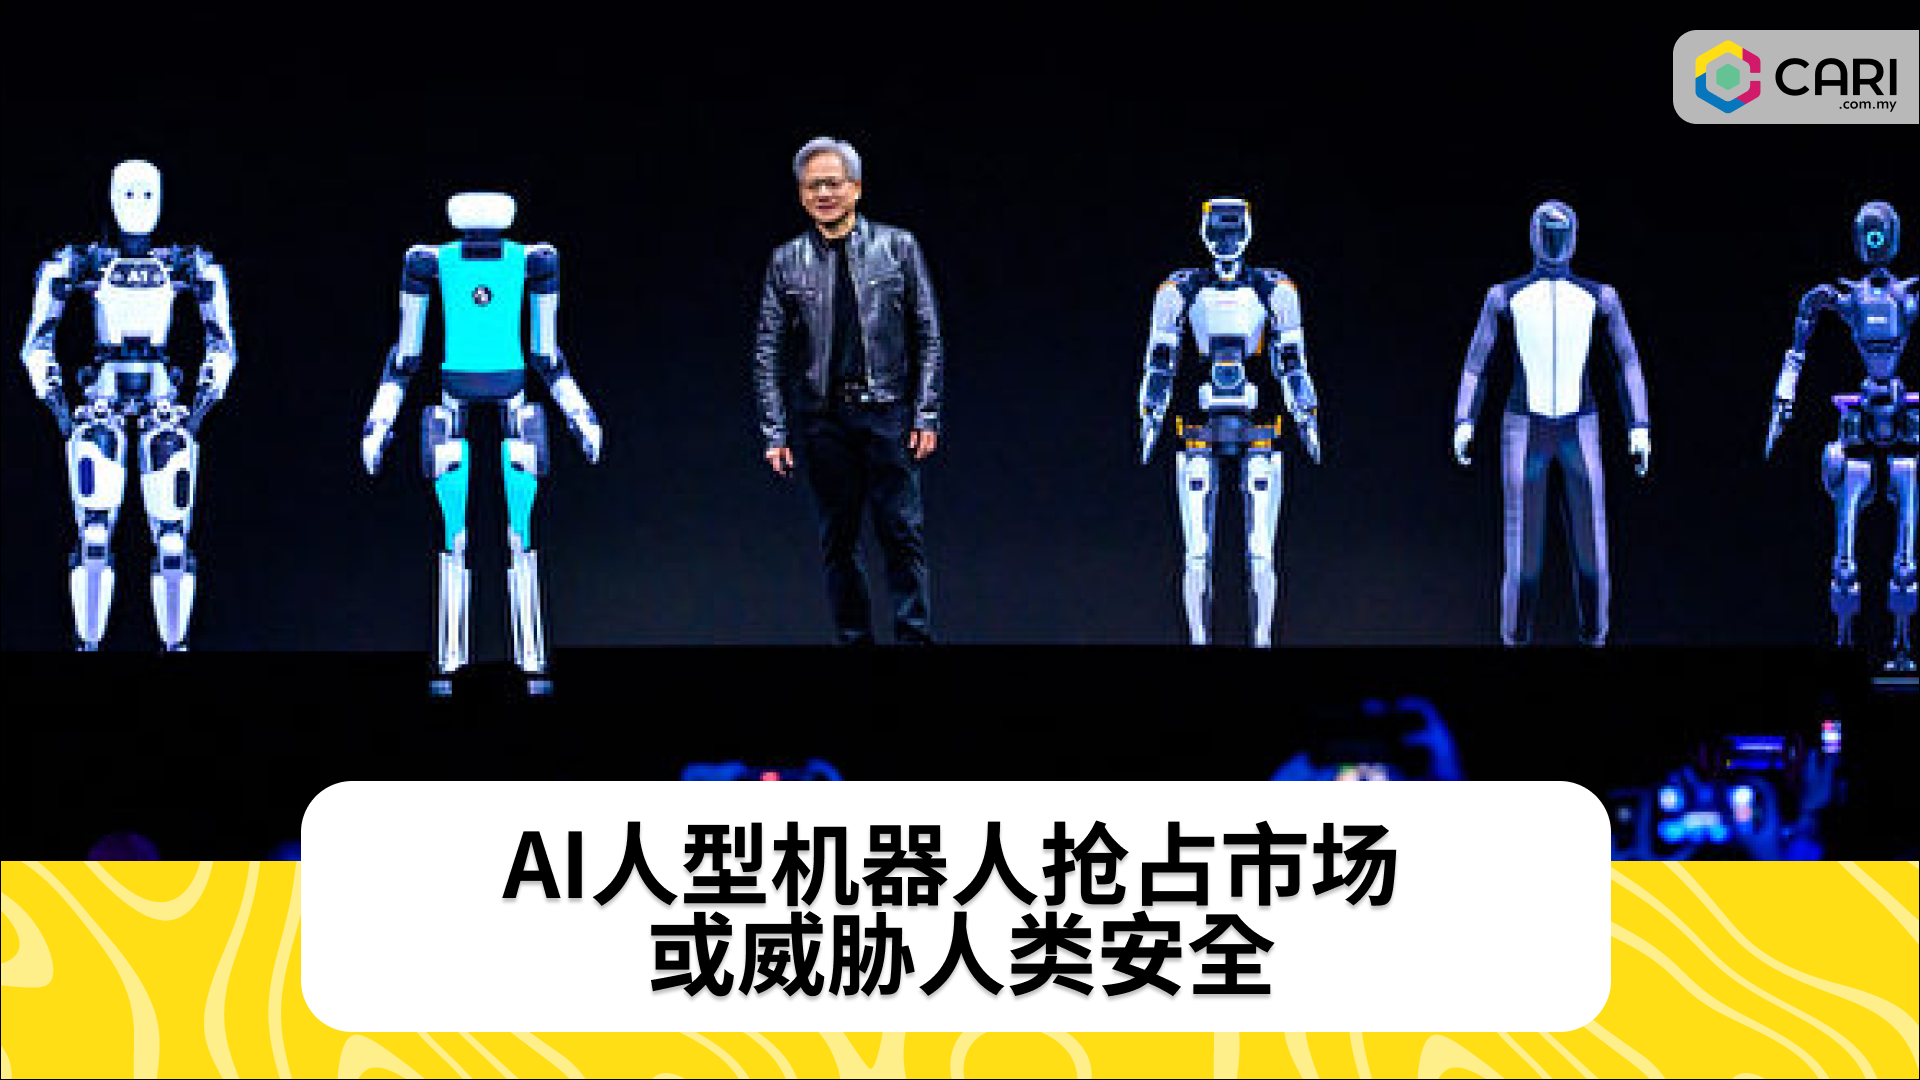 AI人型机器人抢占市场 或威胁人类安全